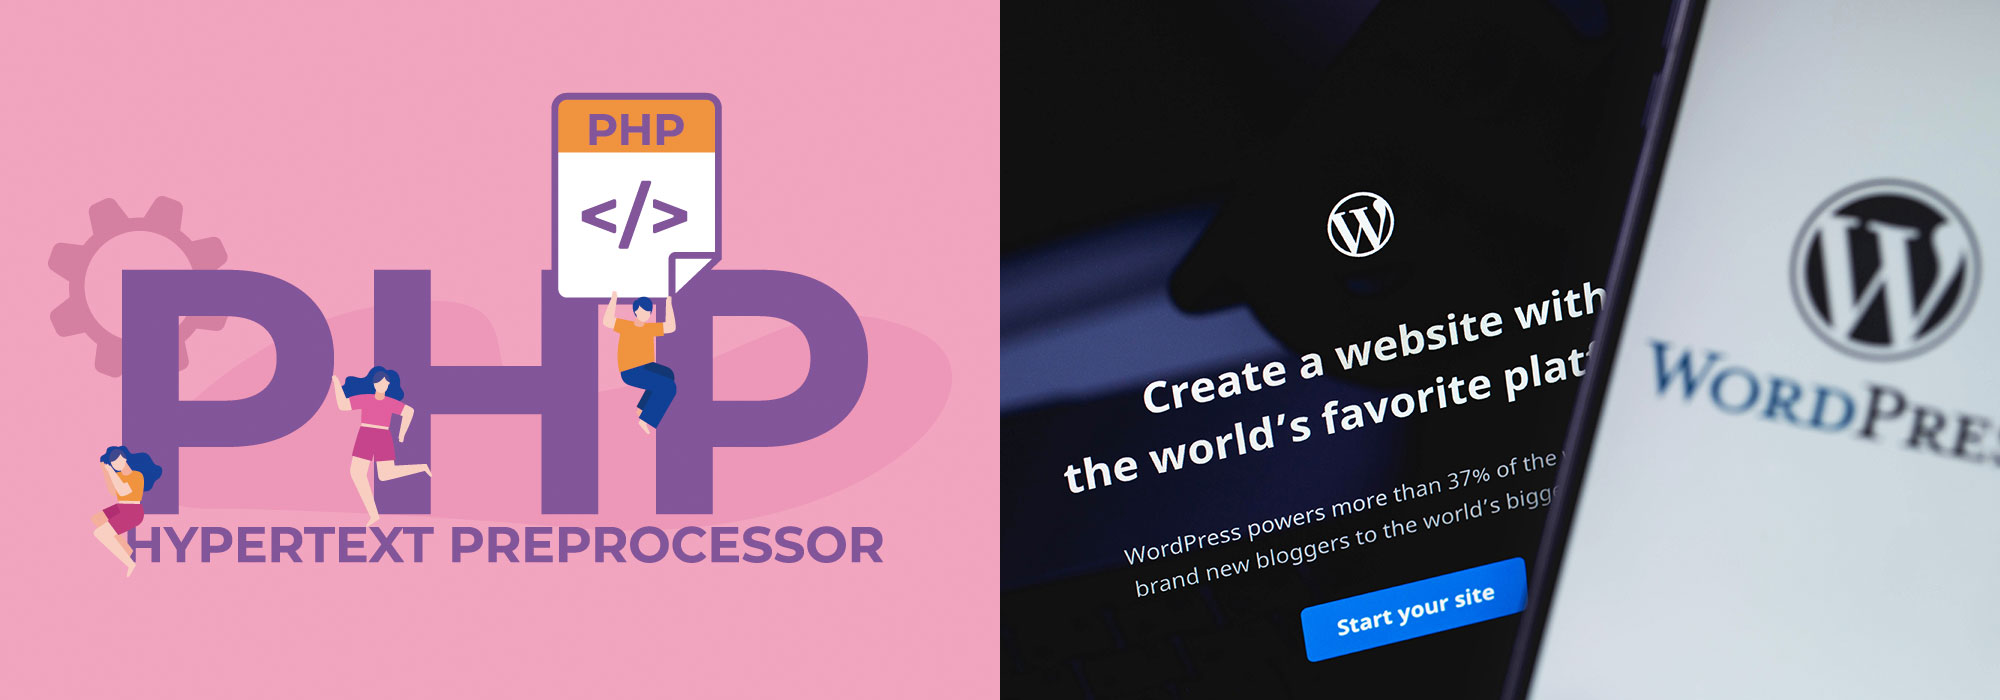 Wordpress PHP アイキャッチ